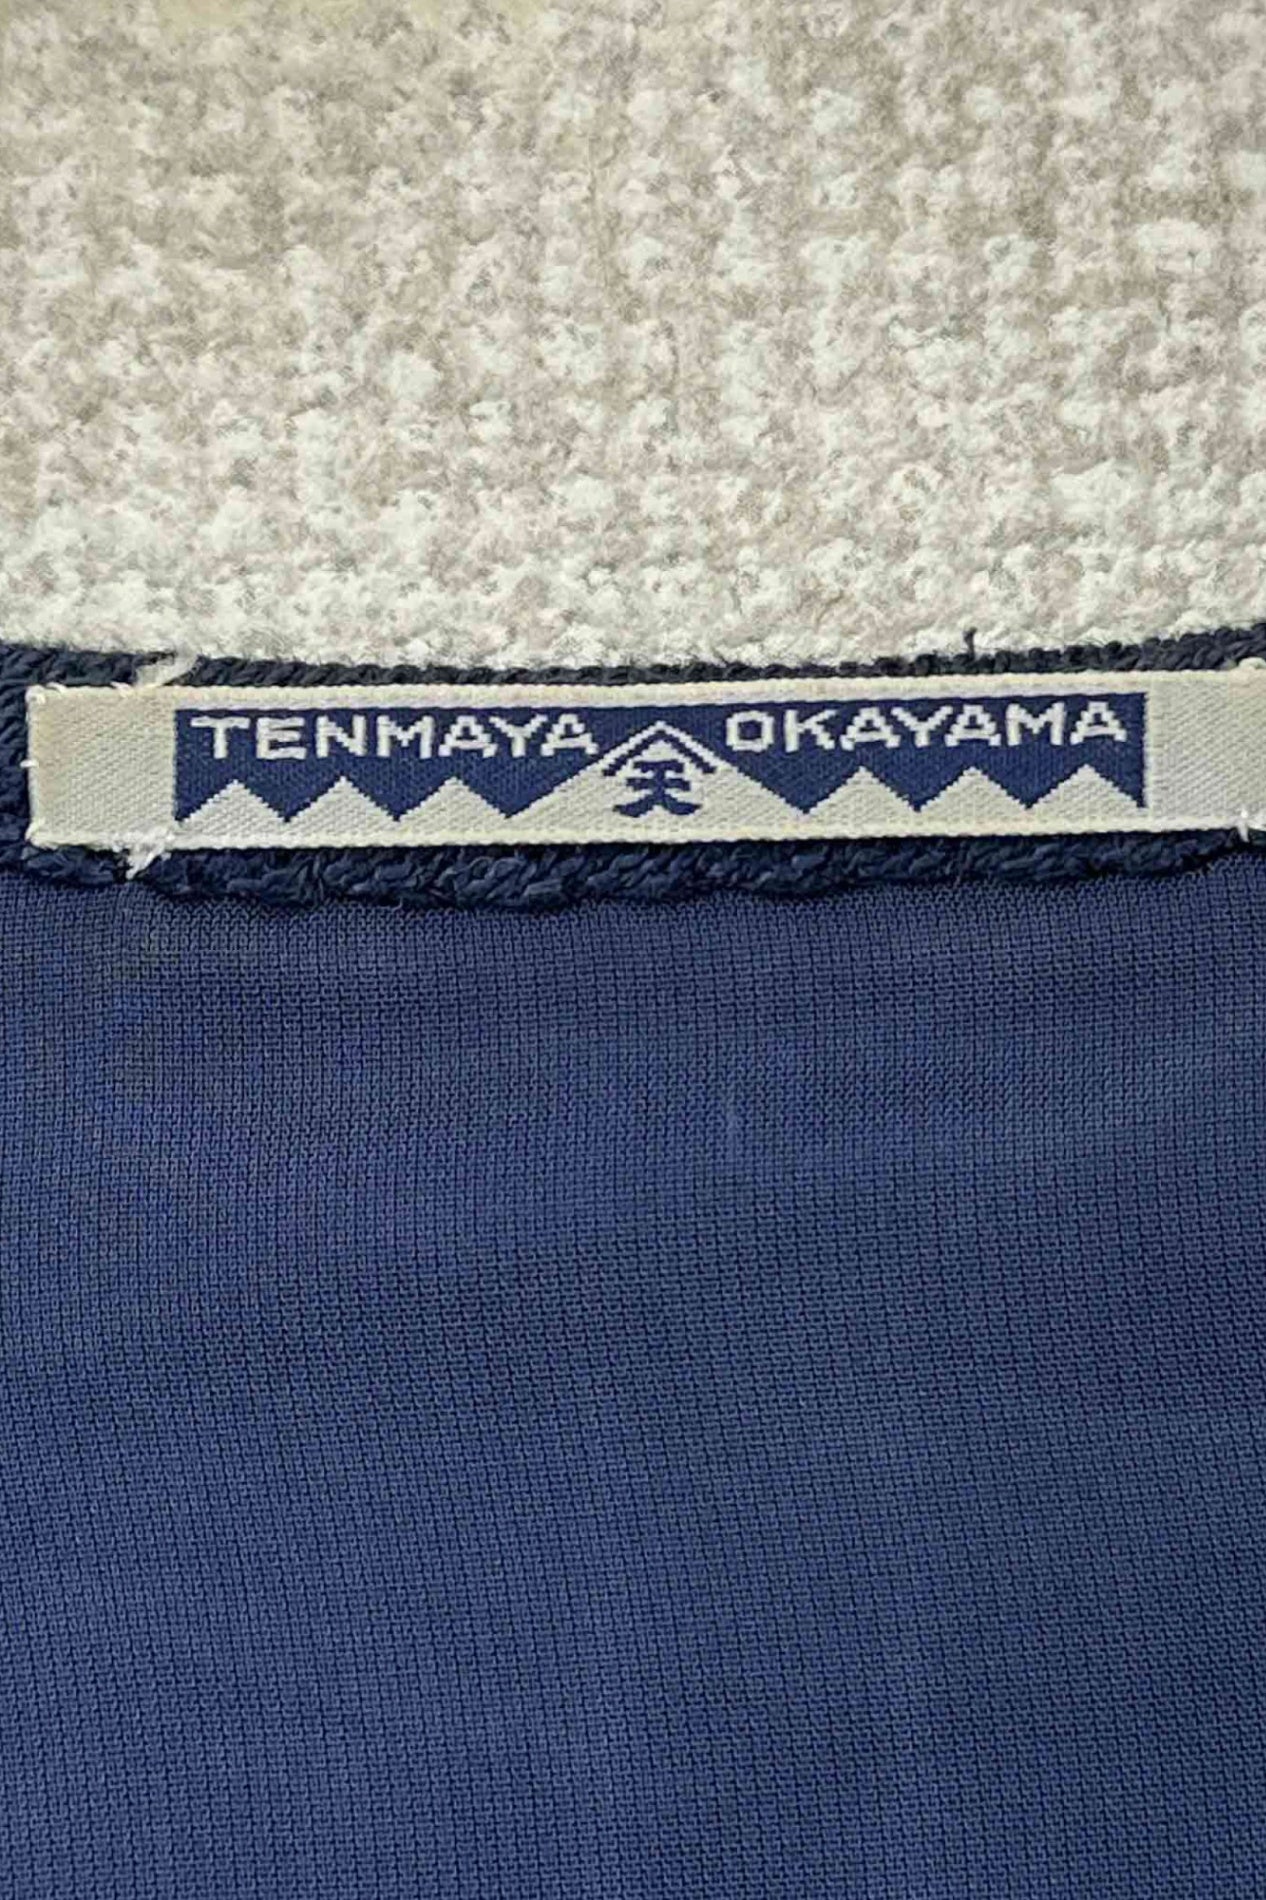 TENMAYA OKAYAMA blue cardigan